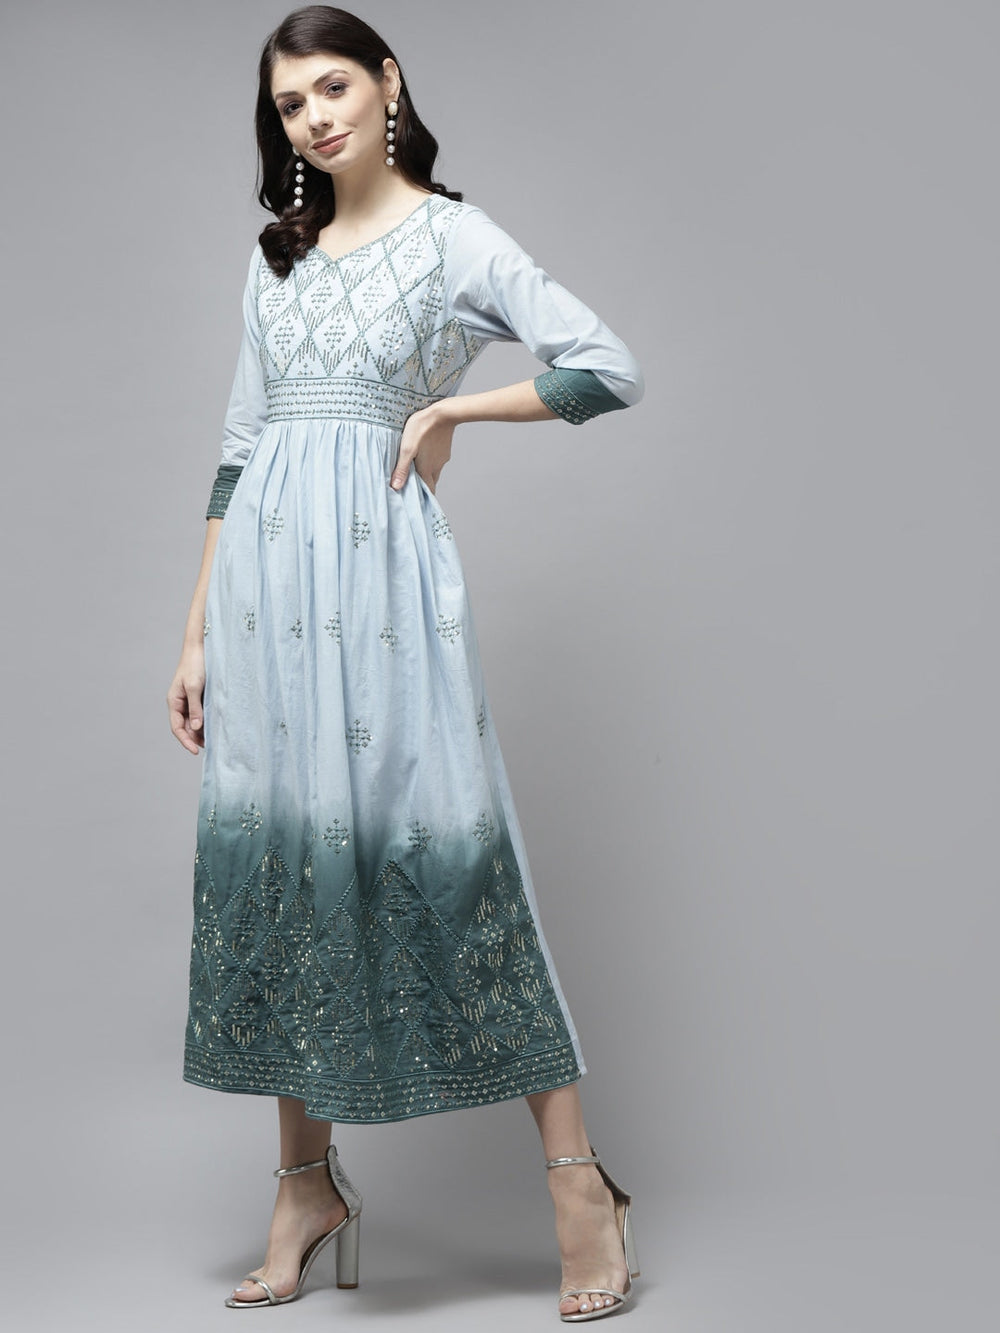 Blue & Teal Green Ethnic Maxi Dress-Yufta Store-2753DRSSBM